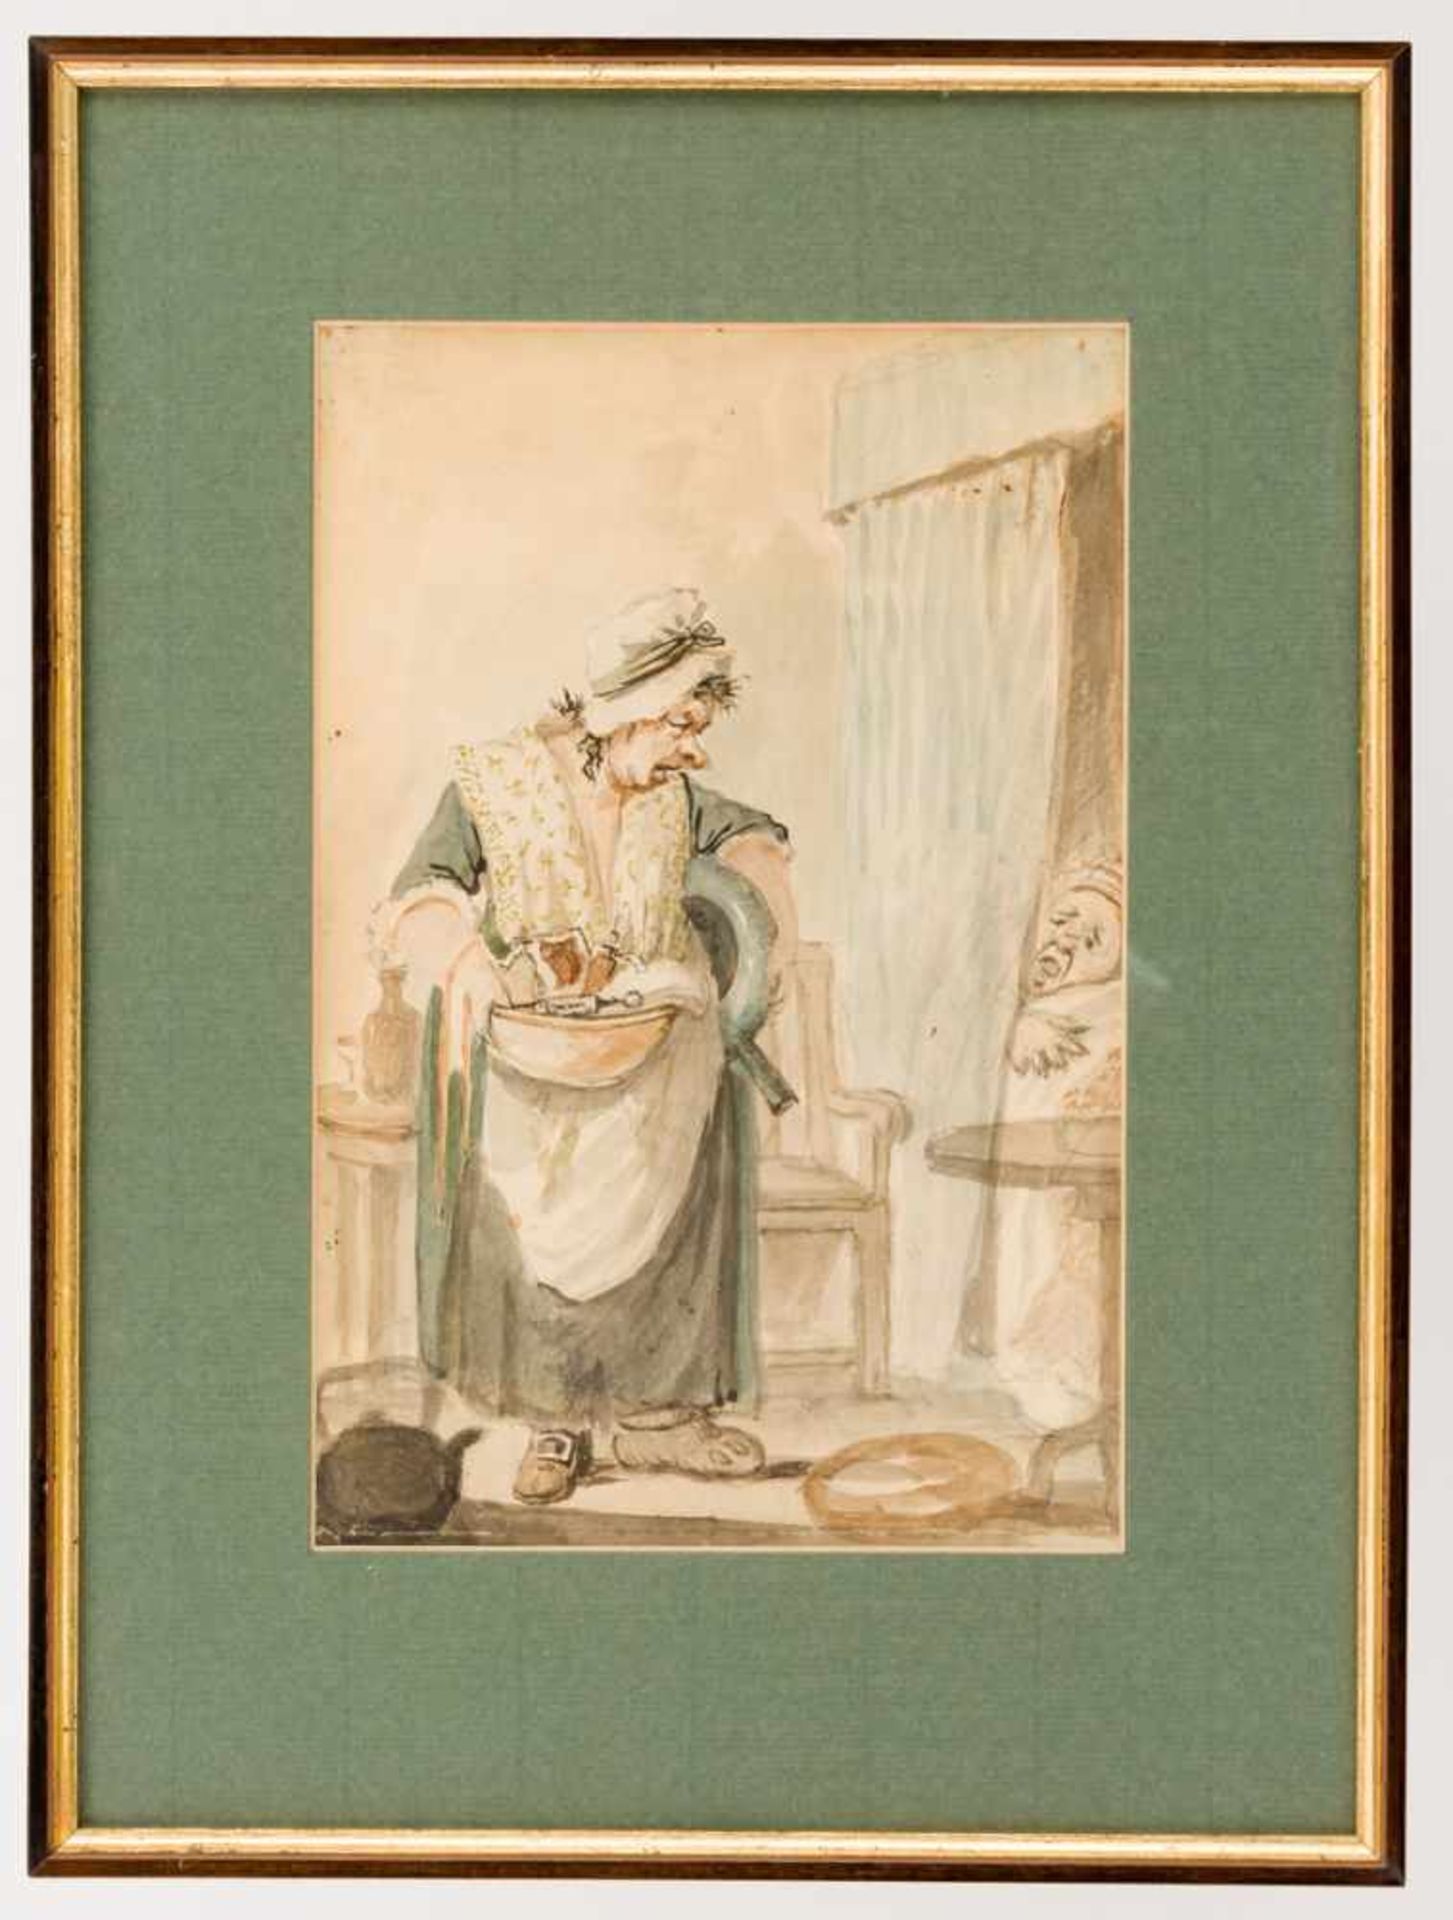 Englischer Künstler Karikatur Aquarell auf Papier, wohl 19. Jh. 25,5 x 17 cm, Rahmen: 38 x 28,5 cm - Image 2 of 2